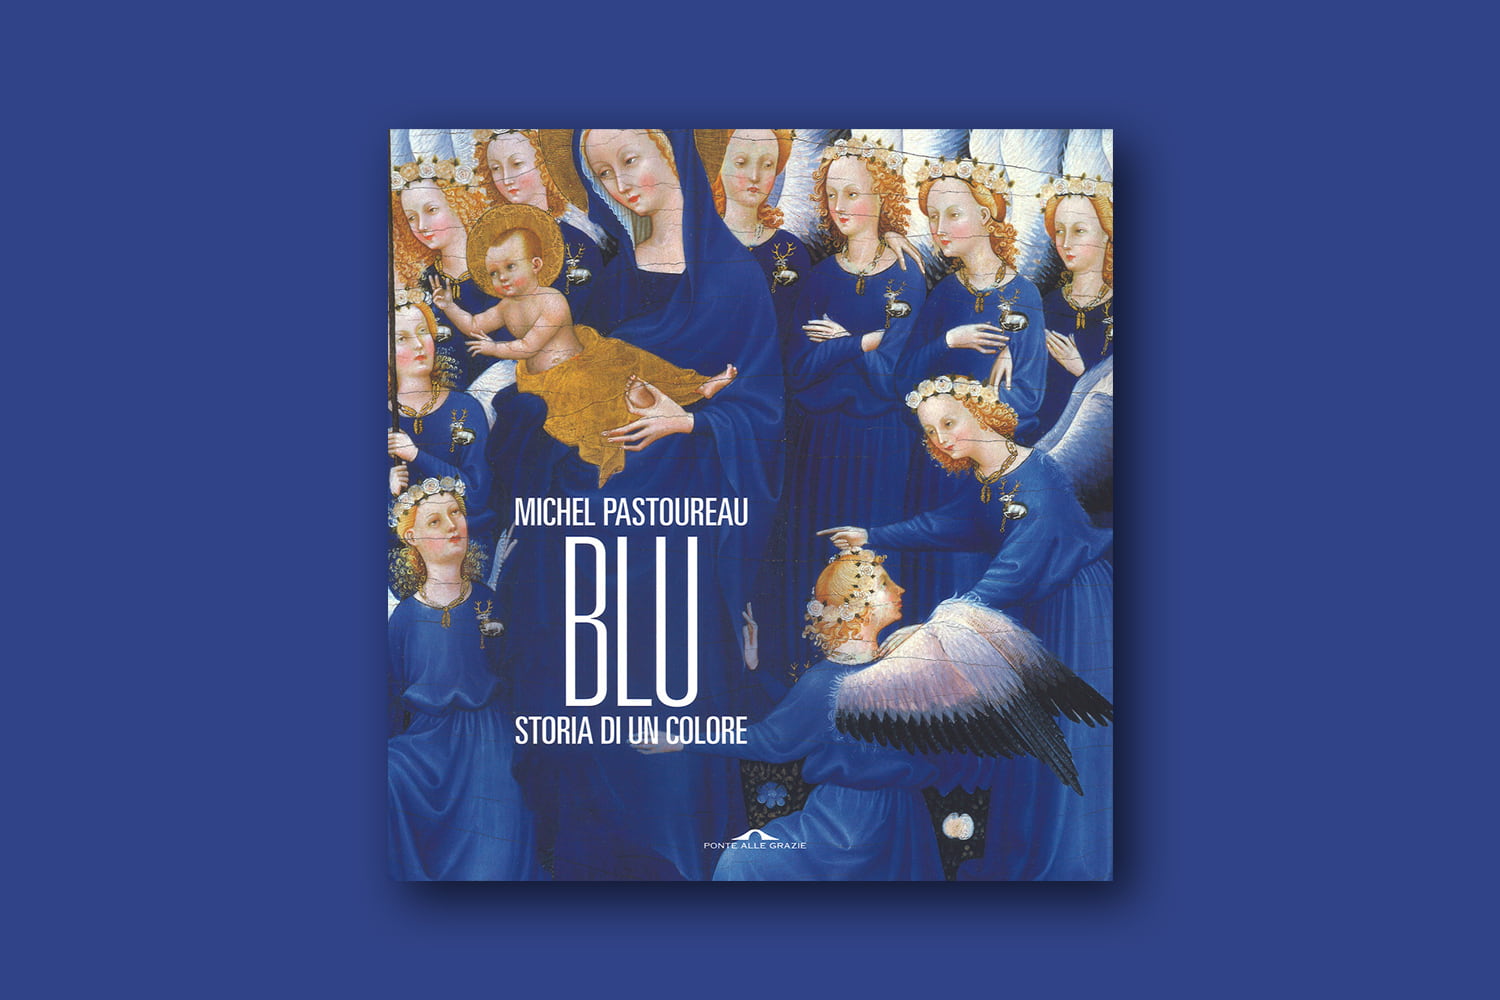 Libri sui colori - Blu. Storia di un colore di Michel Pastoureau